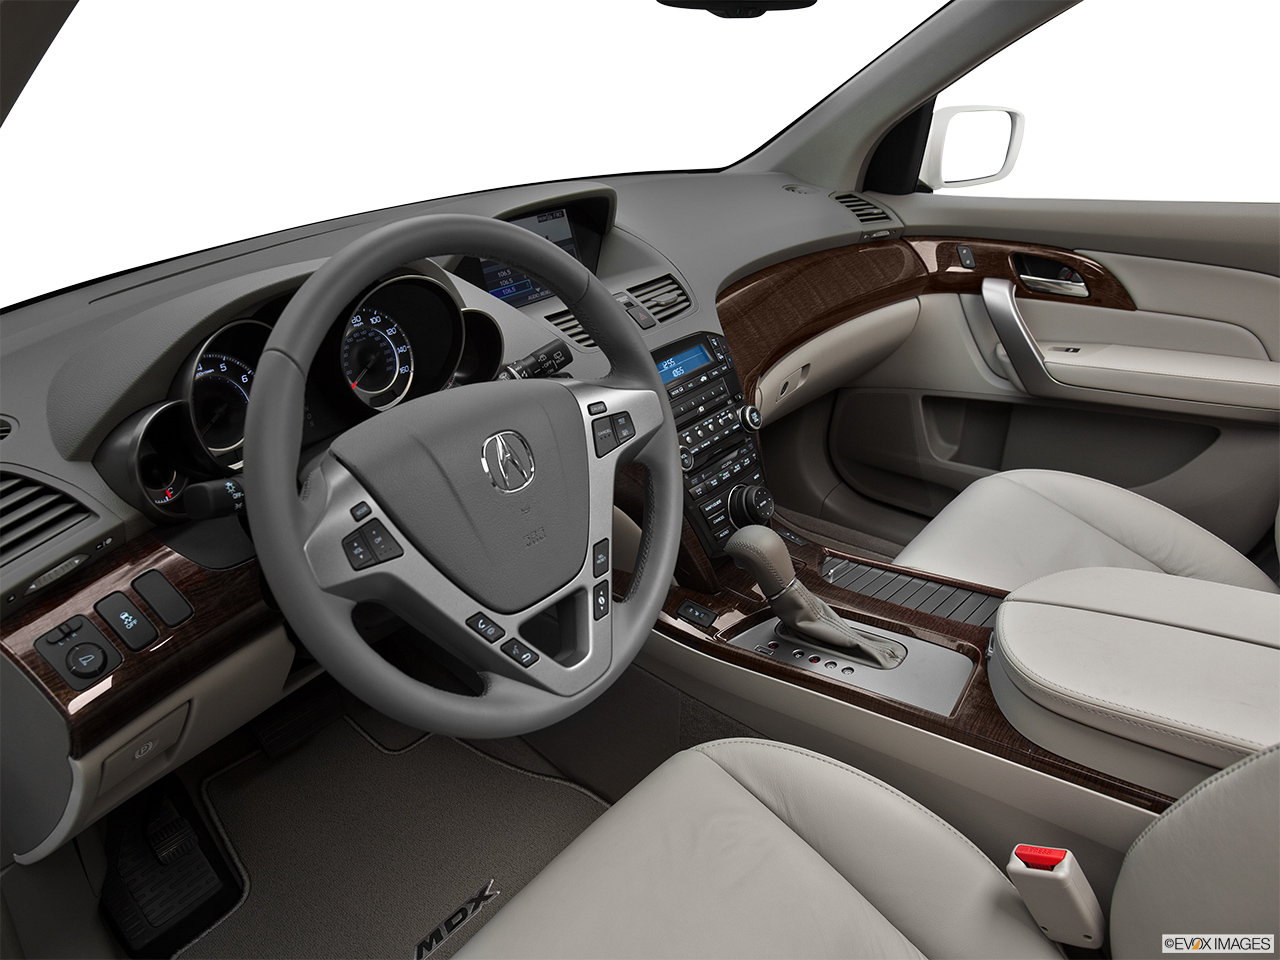 2011 Acura MDX MDX Interior Hero (driver's side). 